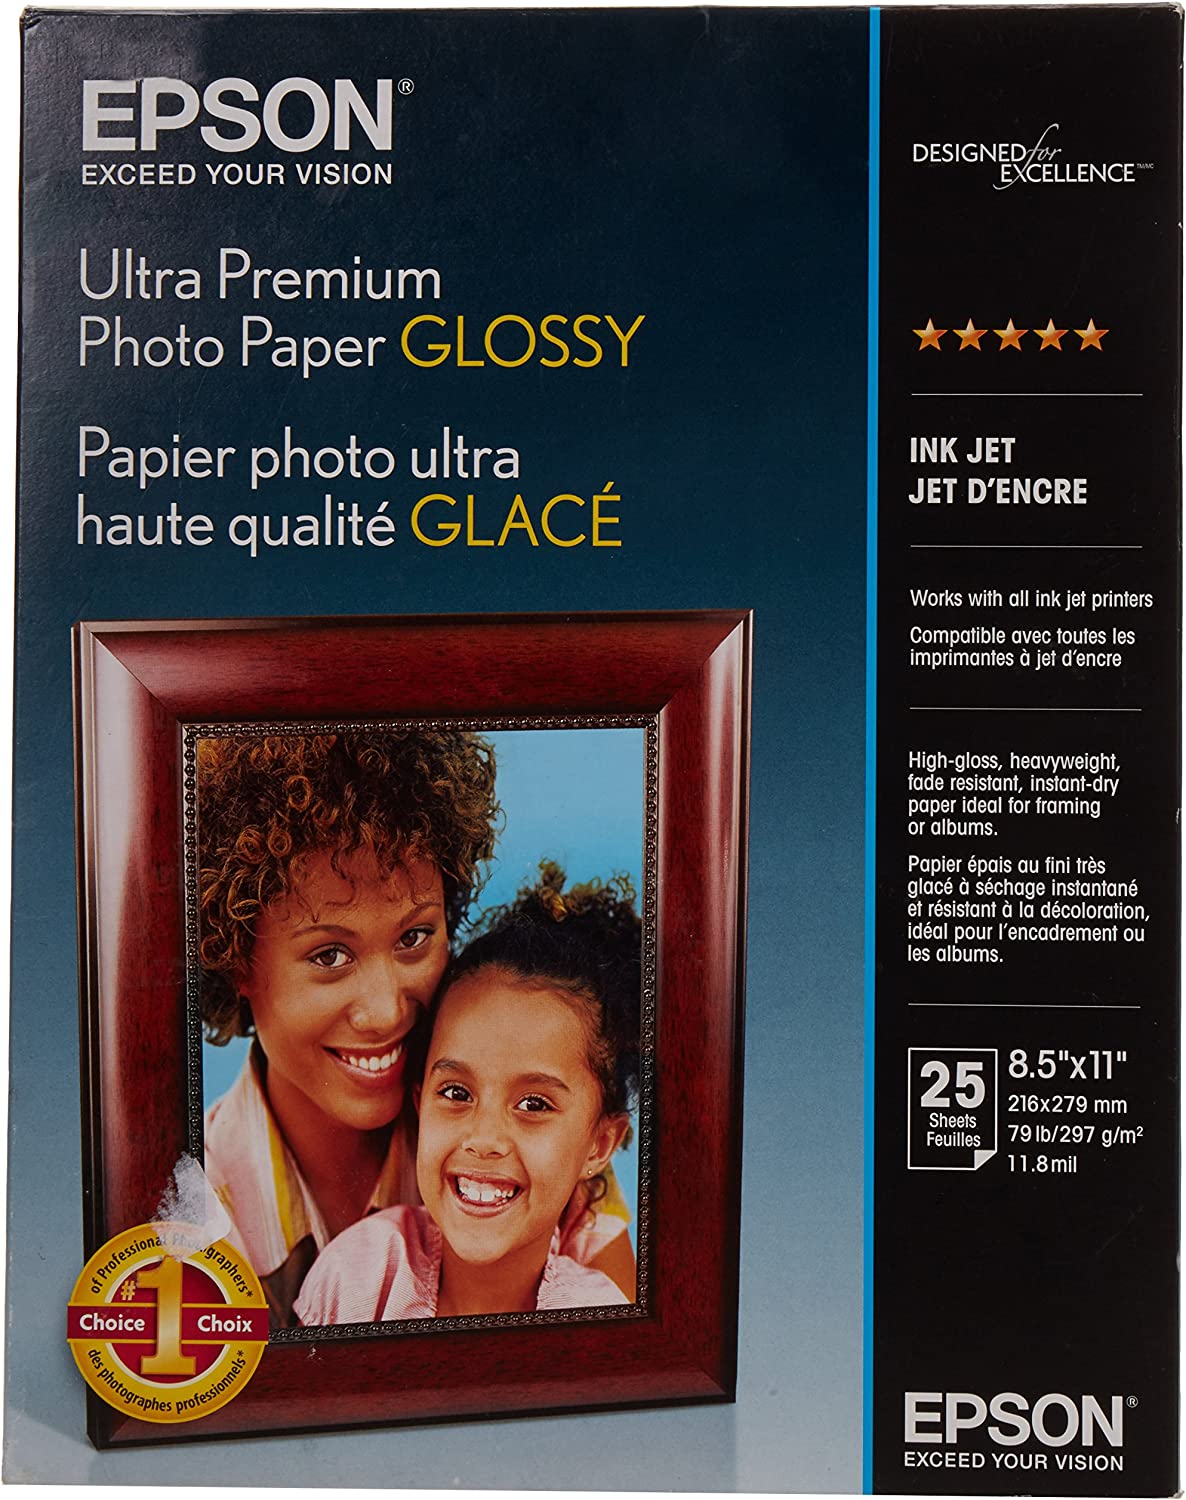 Epson Ultra Premium Photo Paper Glossy, Letter, 8.5 x 11, 25 Sheets (S042182), White